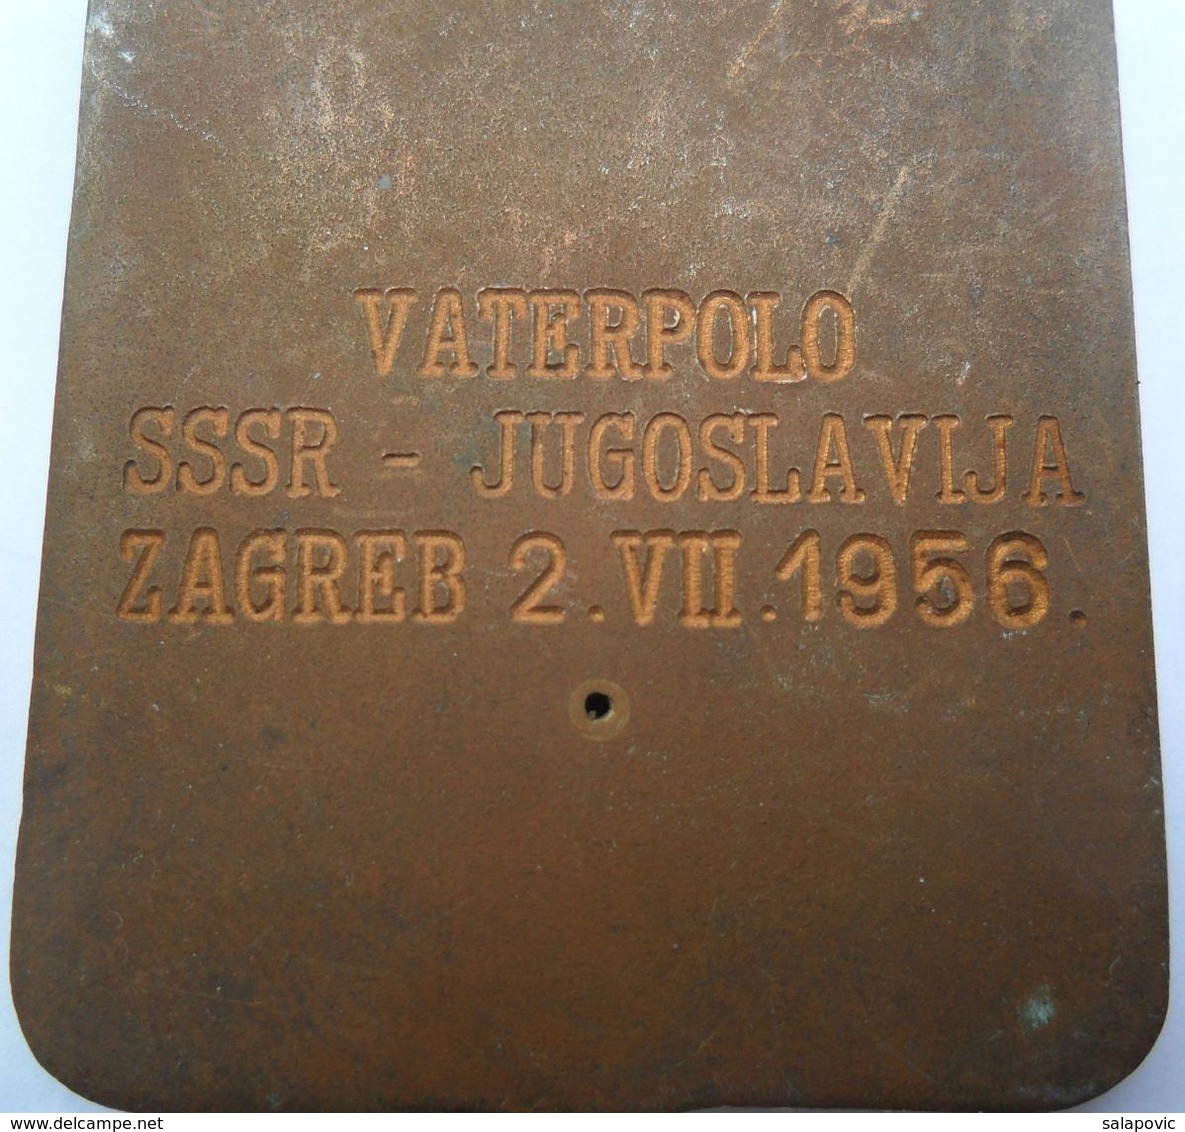 WATER POLO, VATERPOLO SSSR - JUGOSLAVIJA, ZAGREB 2.7.1956  PLAQUE PLIM - Nuoto